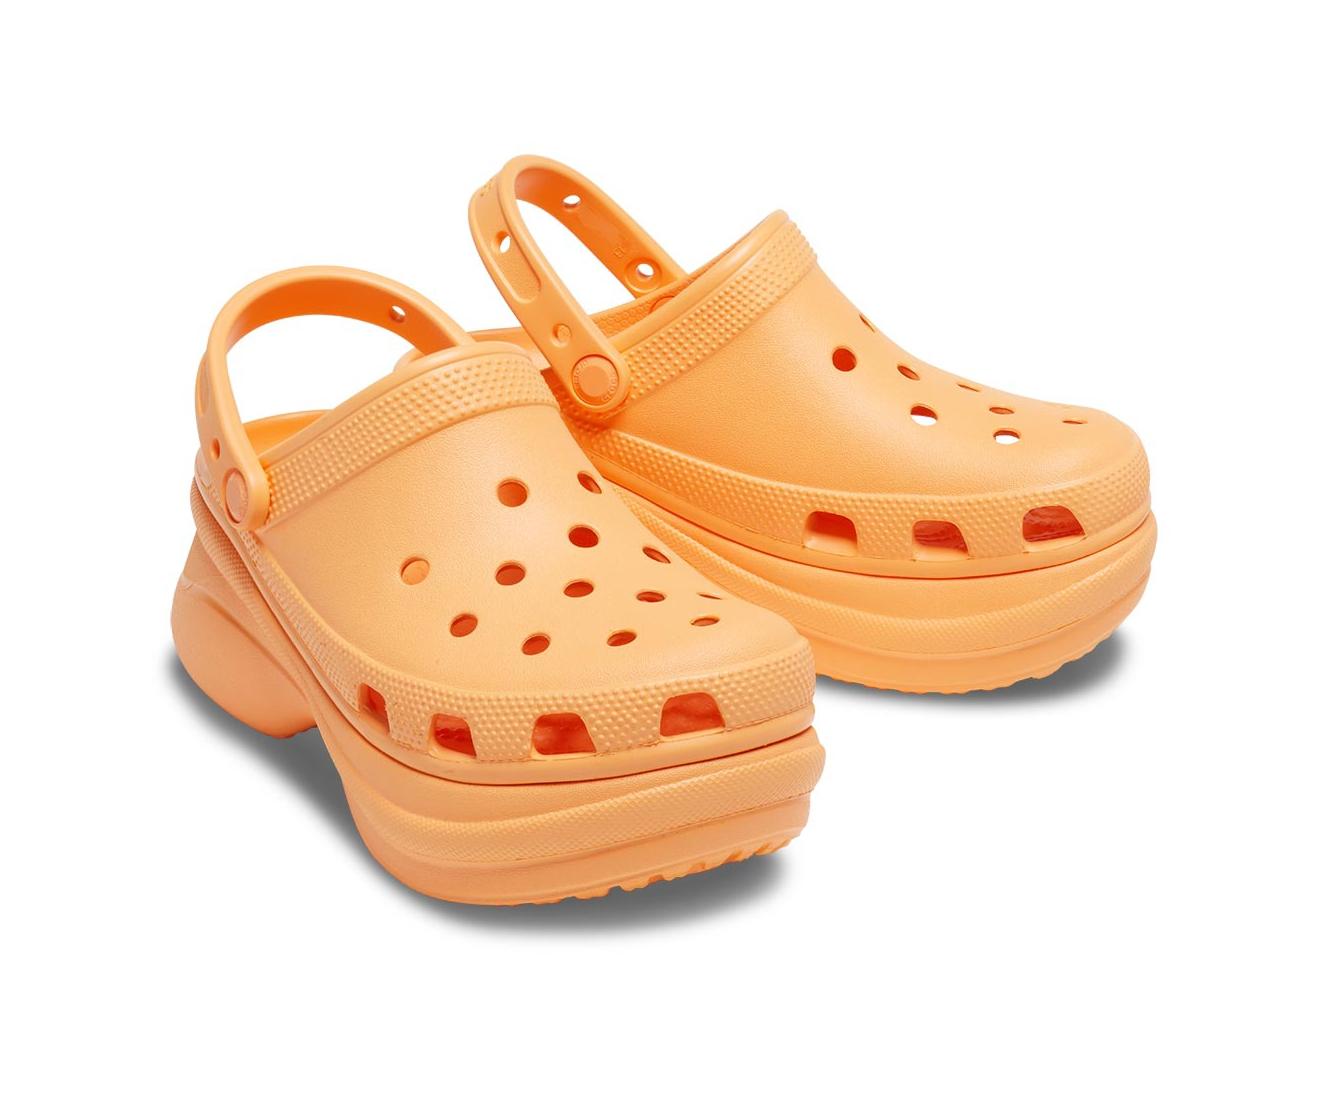 cantaloupe orange crocs